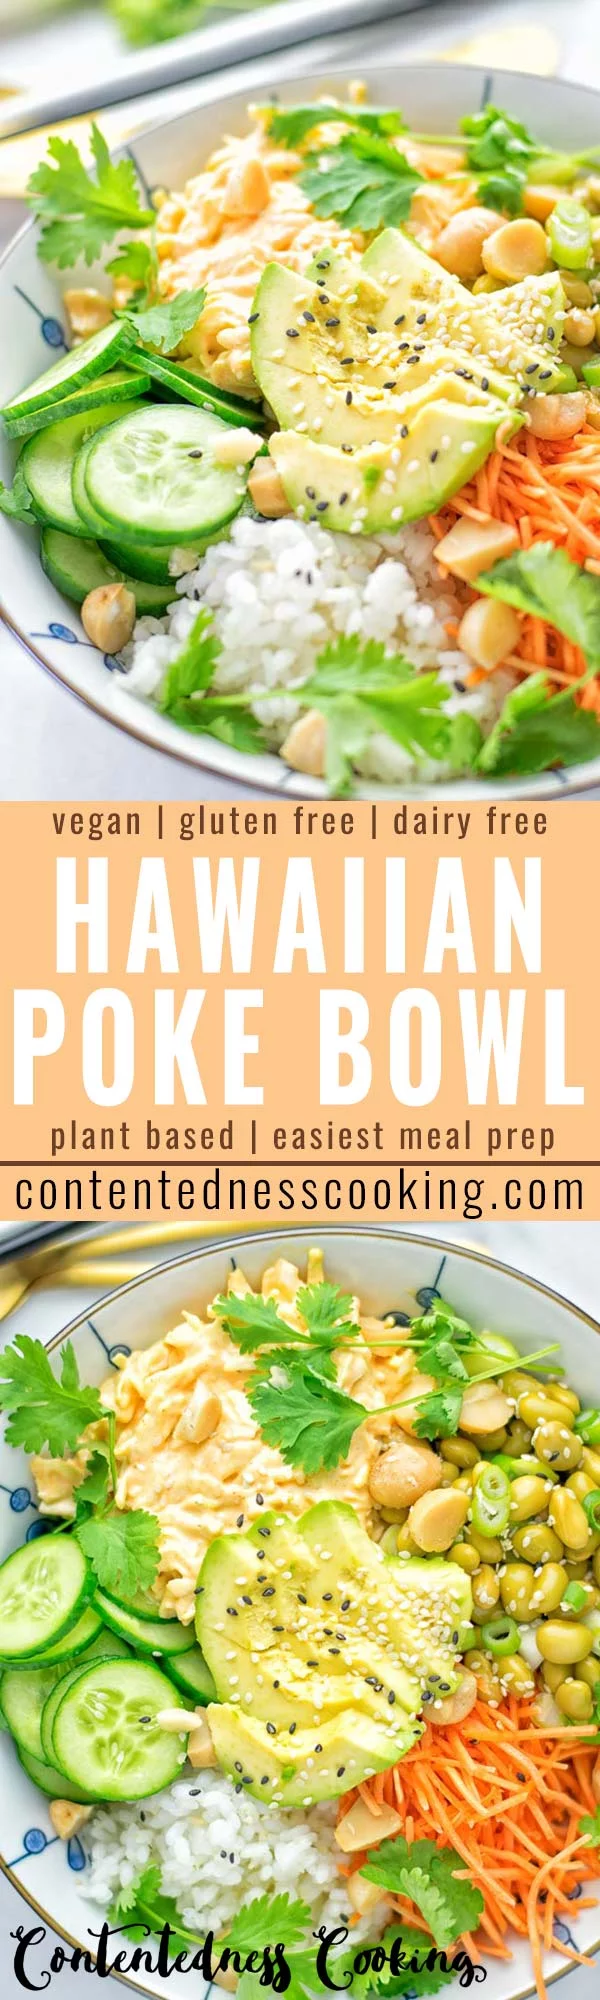 Hawaiian Poke Bowl (meal prep, vegan, gluten free) - Contentedness Cooking